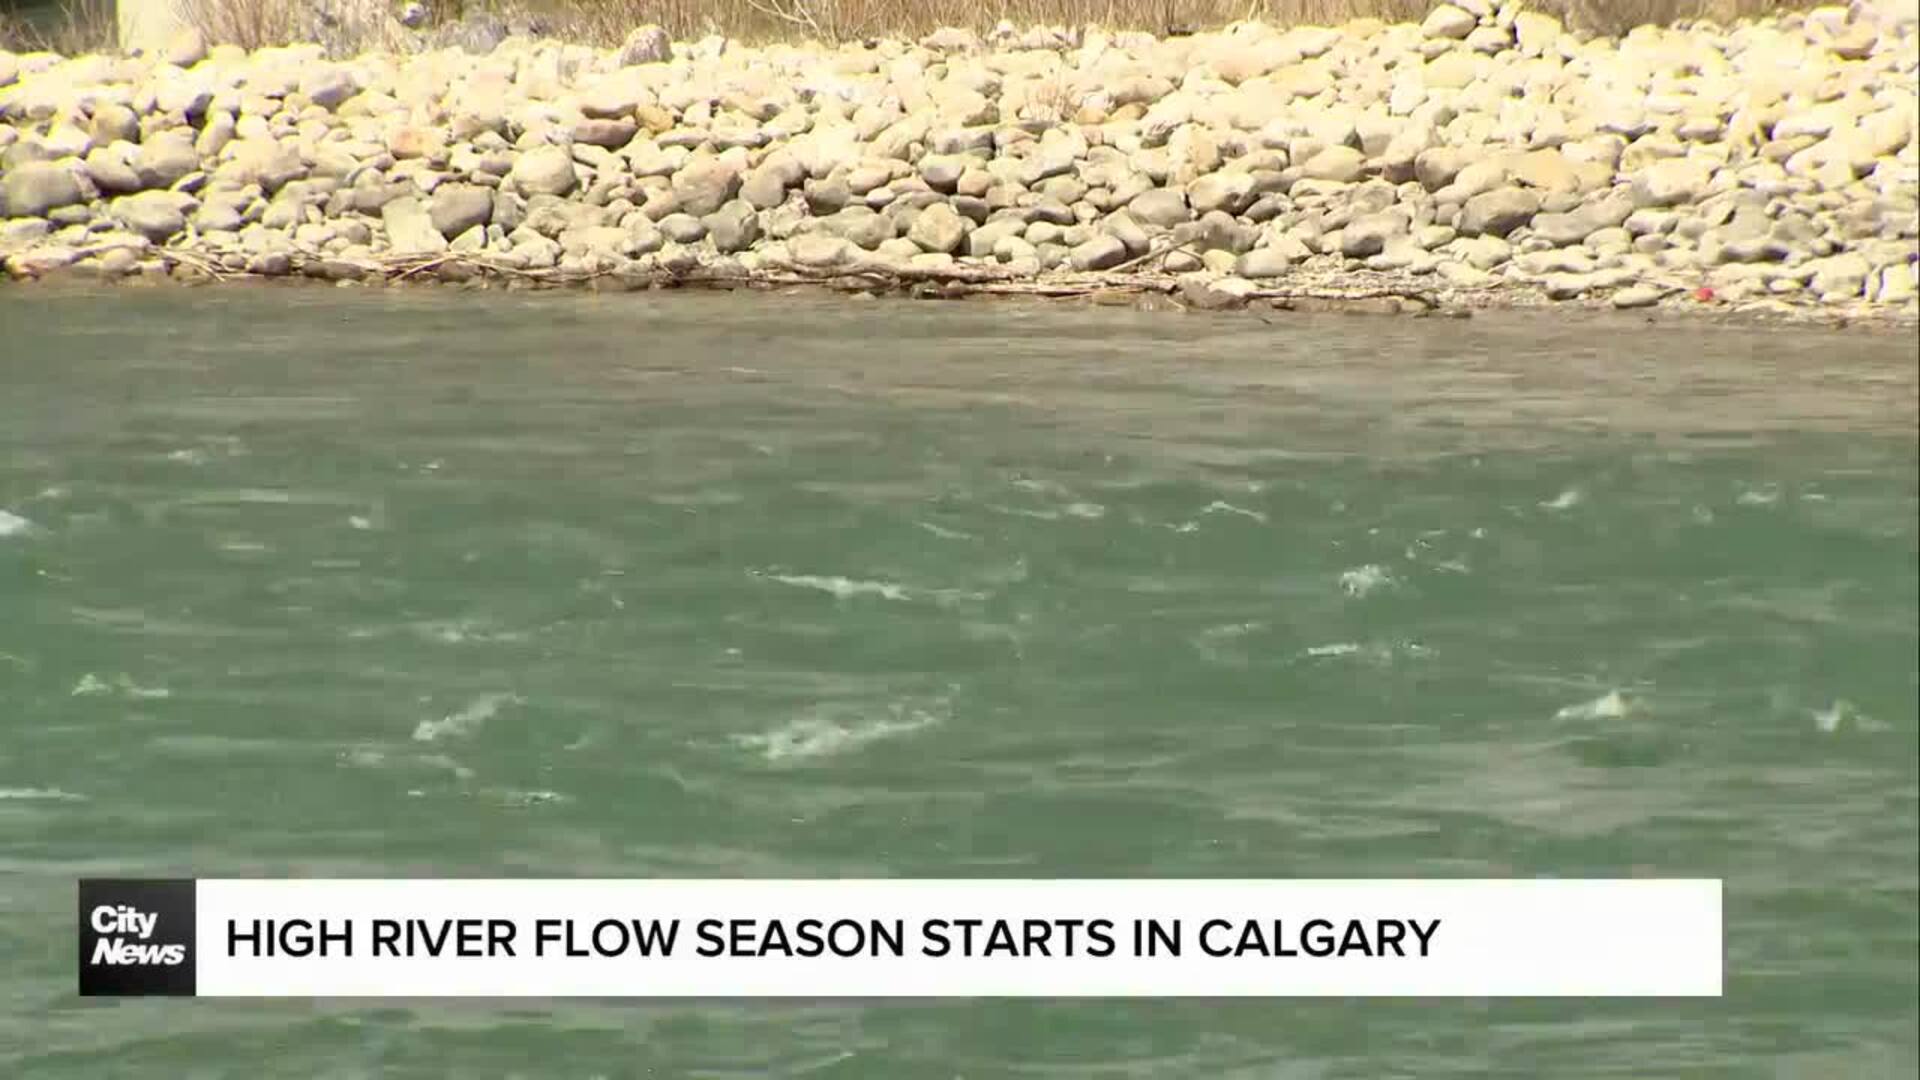 High river flow season starts in Calgary